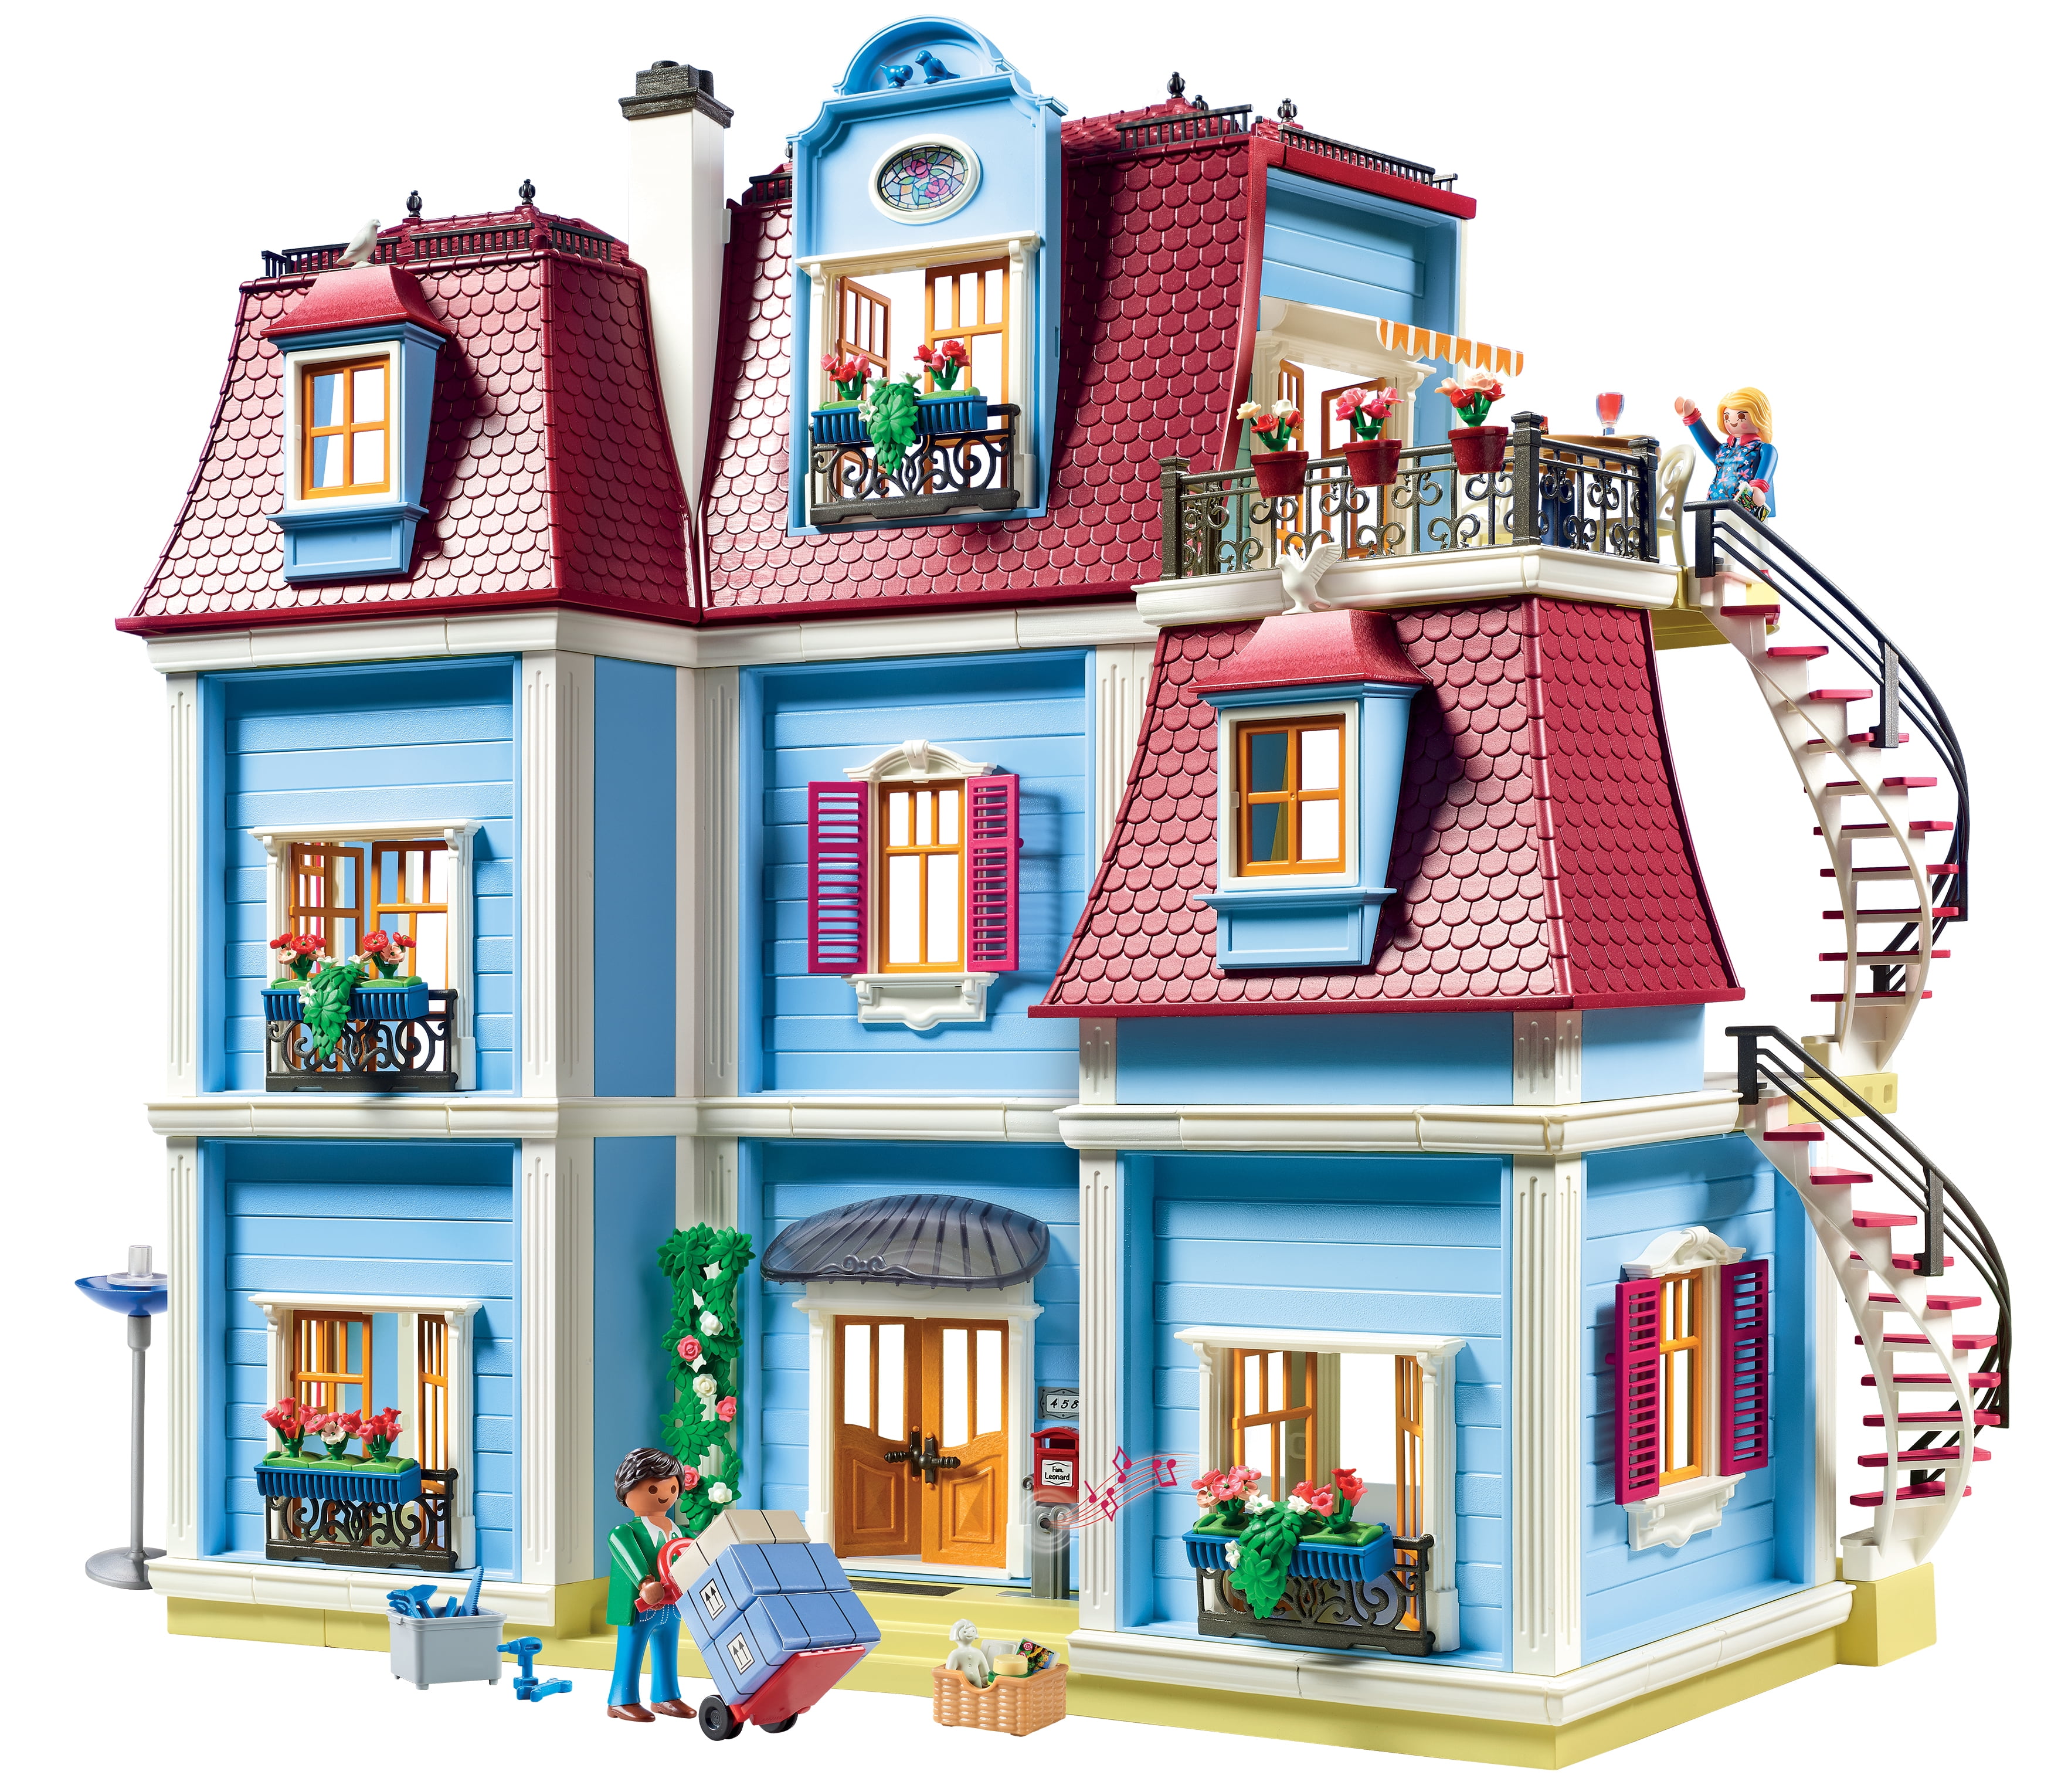 Playmobil RD-1 City Life Ethnic Woman Figure Holiday School Dollhouse 